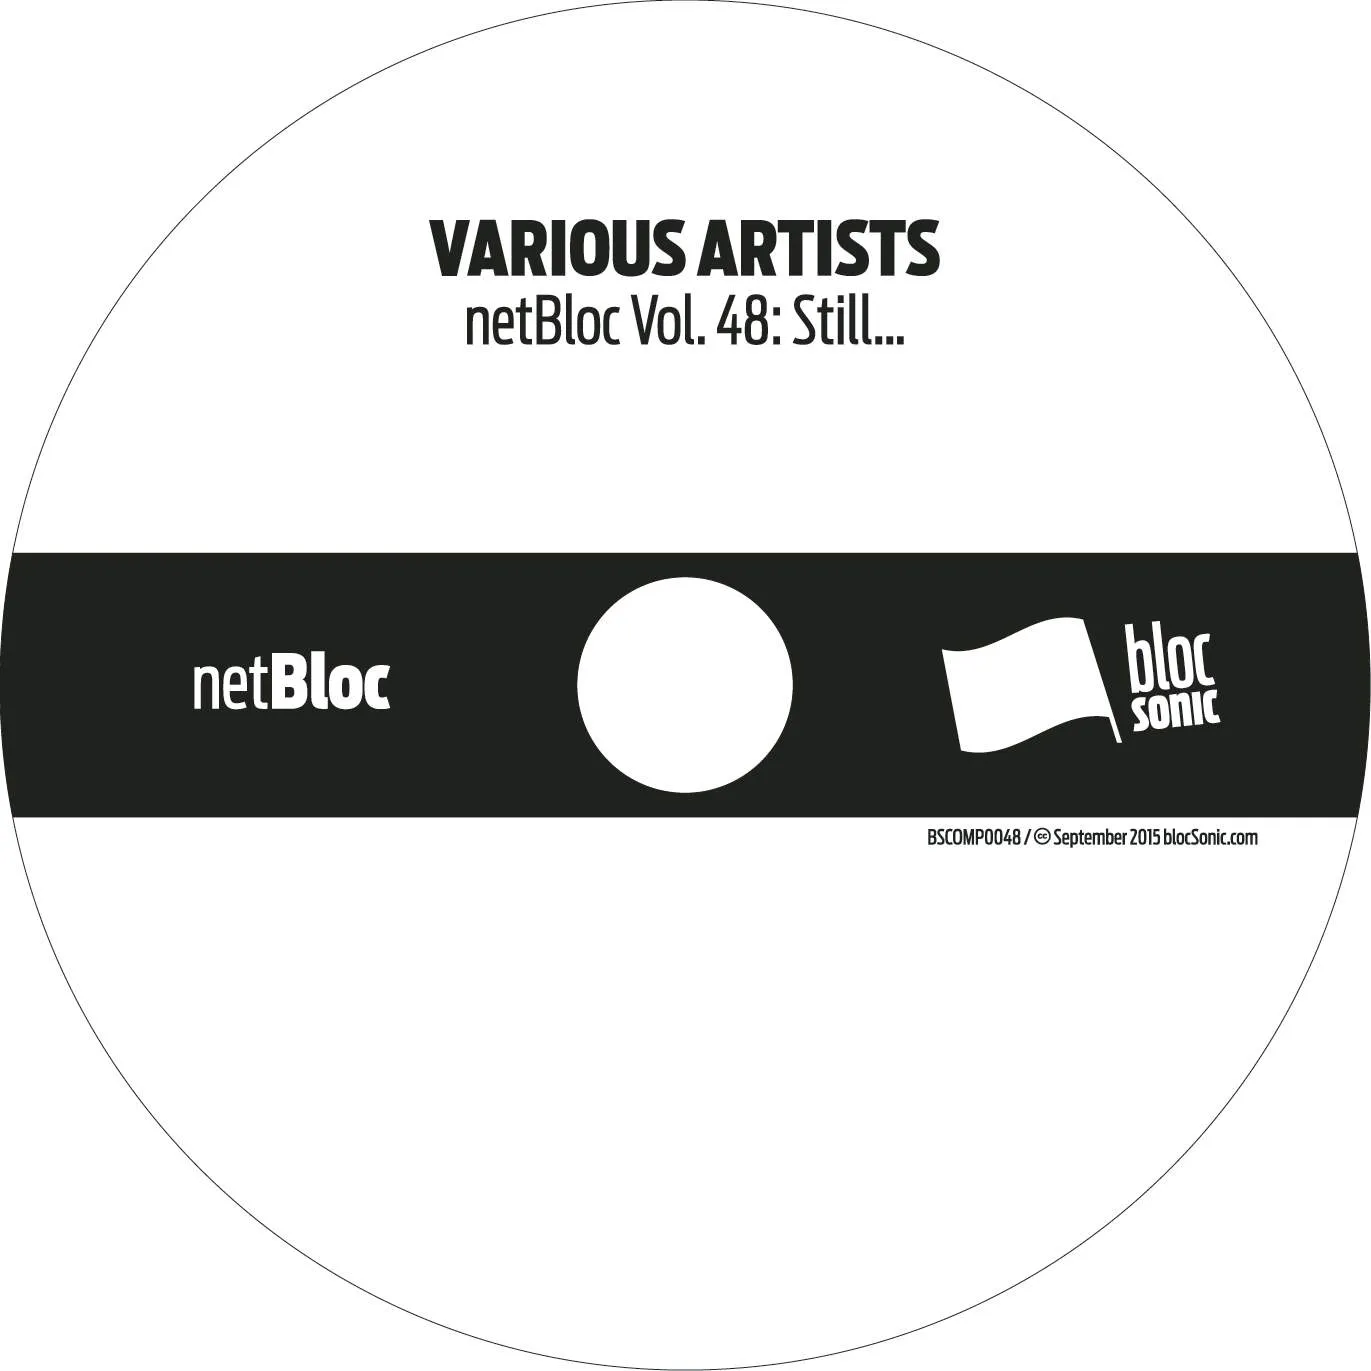 Album disc for “netBloc Vol. 48: Still…” by Various Artists